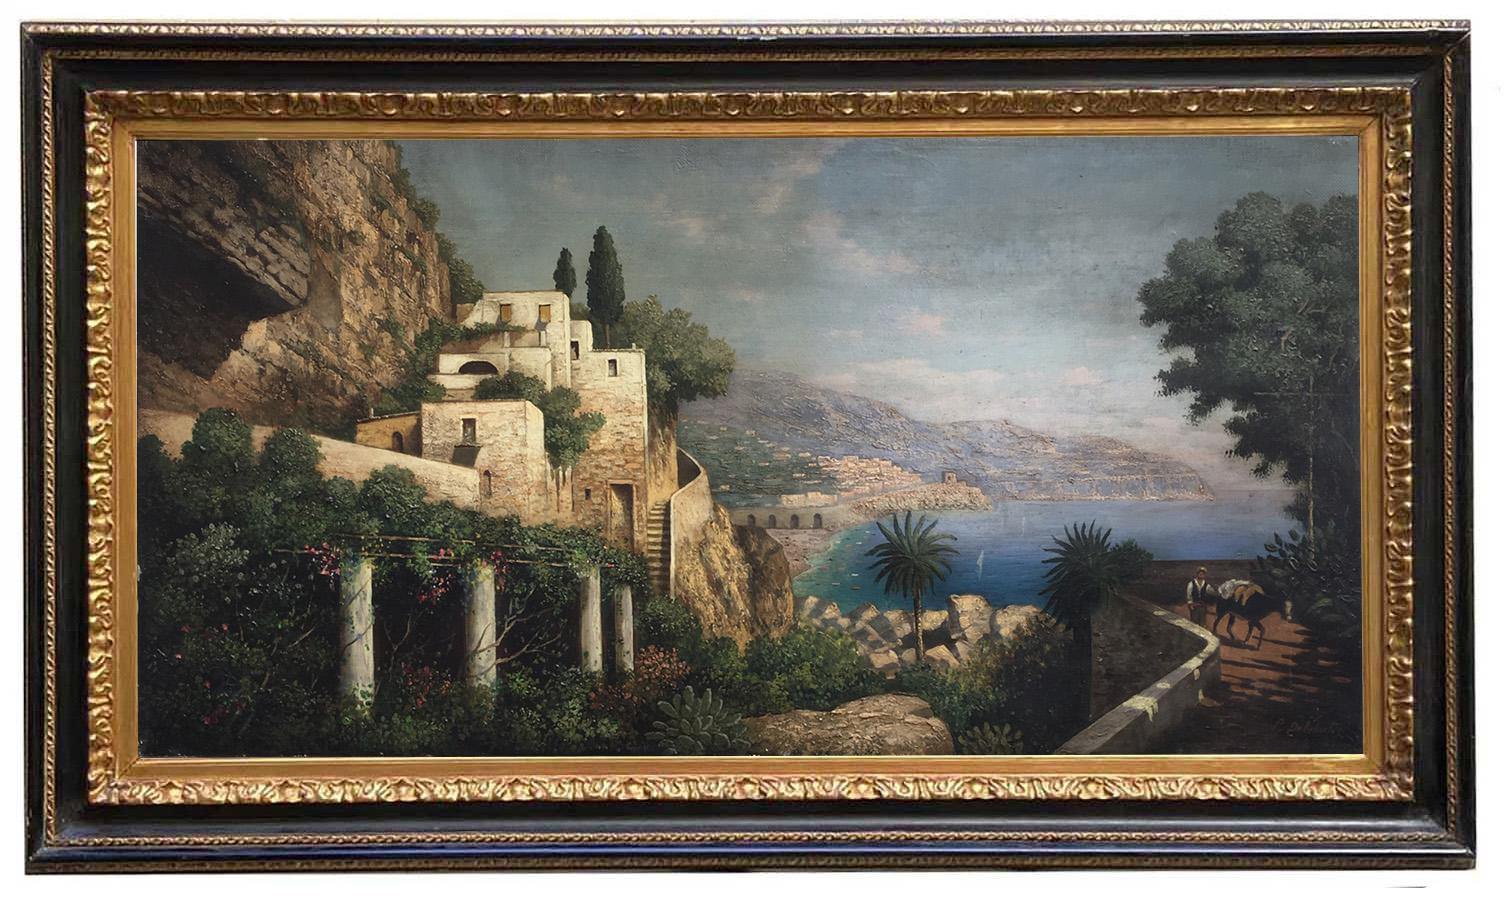 Paolo De Robertis Landscape Painting - COAST- Posillipo School - Italian Landscape Oil on Canvas Painting